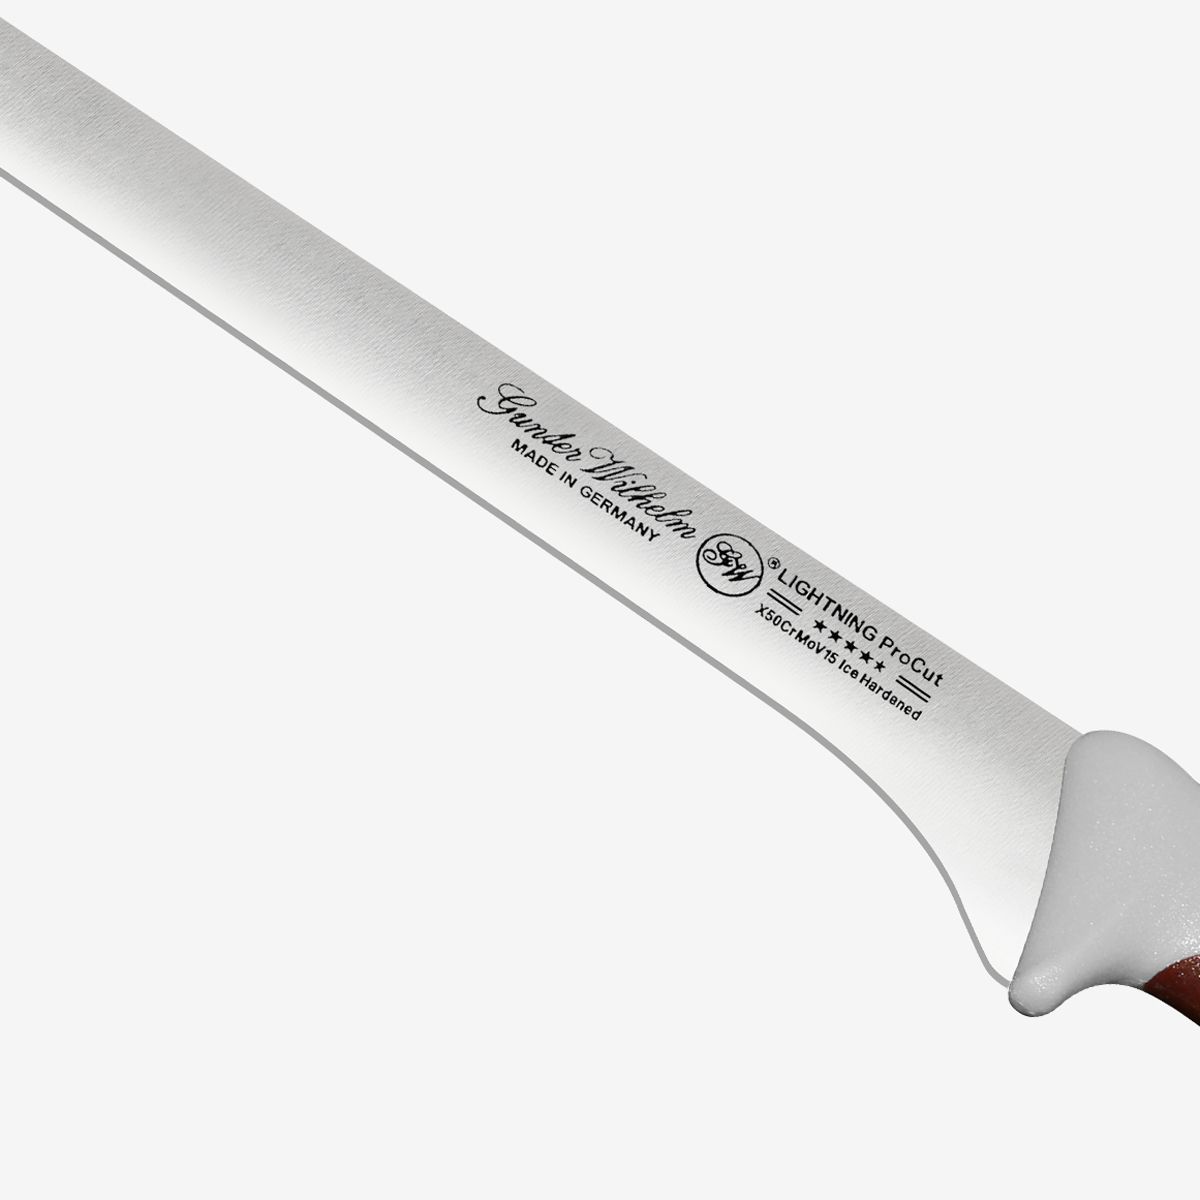 Gunter Wilhelm Thunder Flex Fillet Knife, 10 Inch | Brown and Grey ABS Handle SKU: 10-109-0310